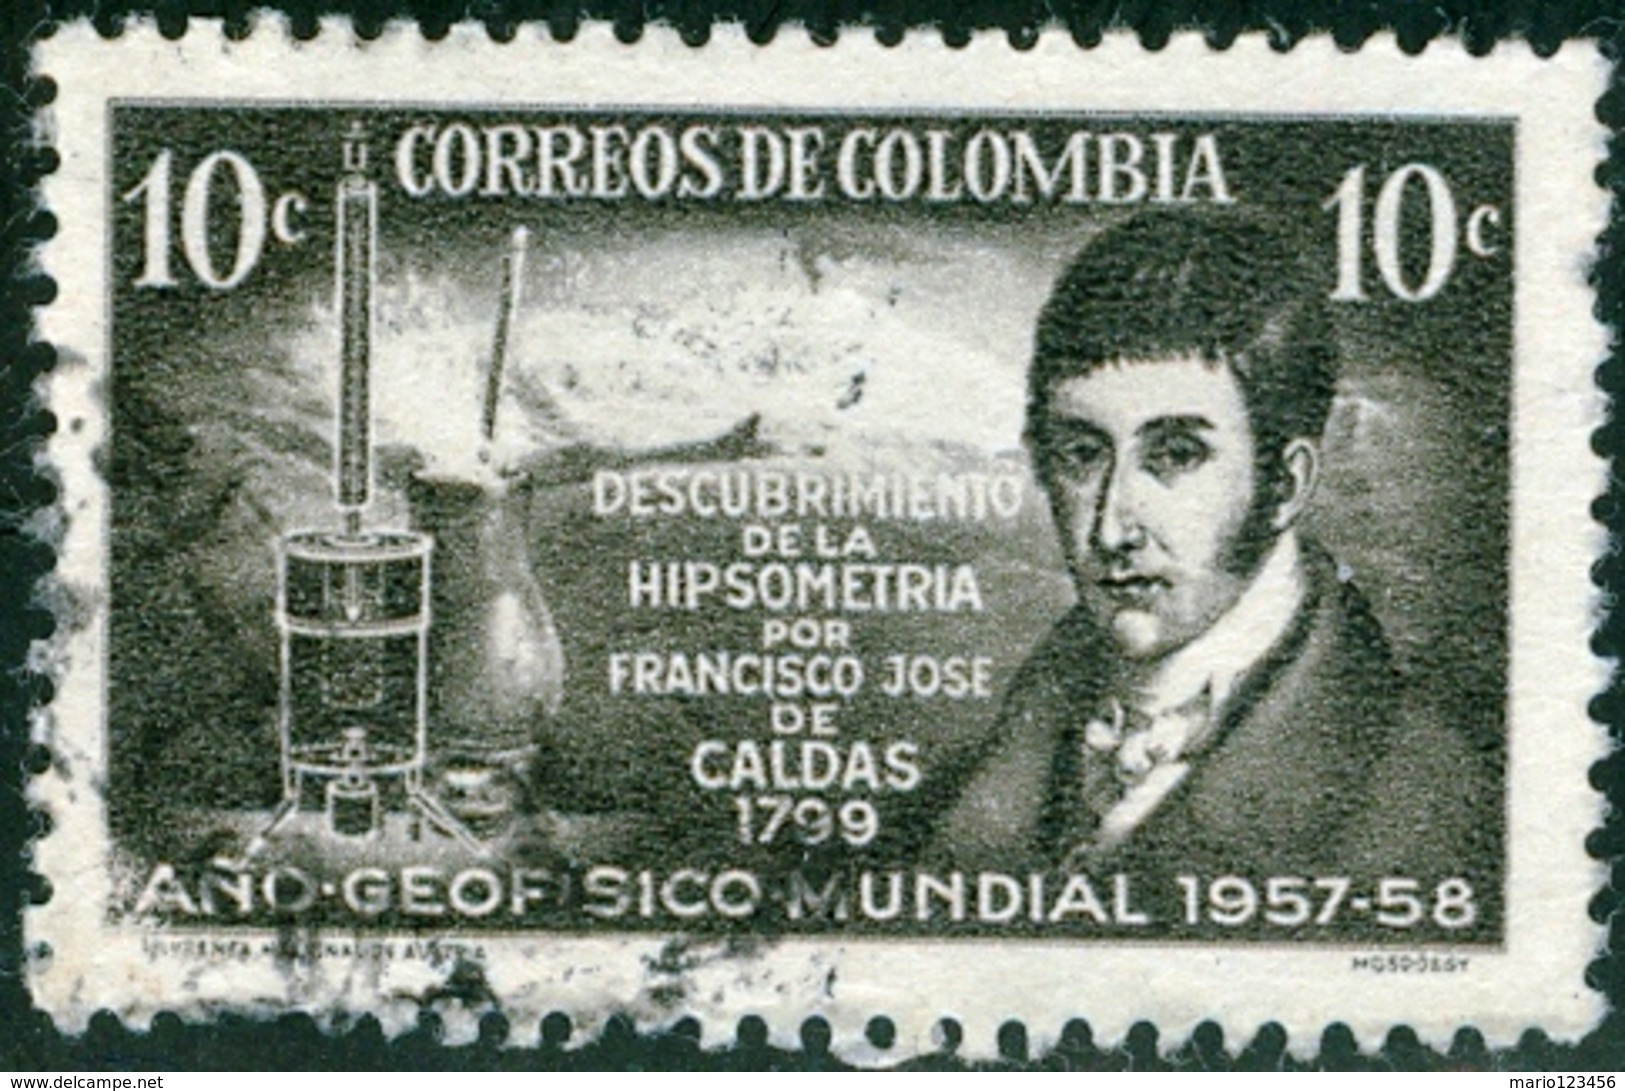 COLOMBIA, 1958, COMMEMORATIVO, FRANCISCO JOSE DE CALDAS, FRANCOBOLLO USATO, Scott 680 - Colombia